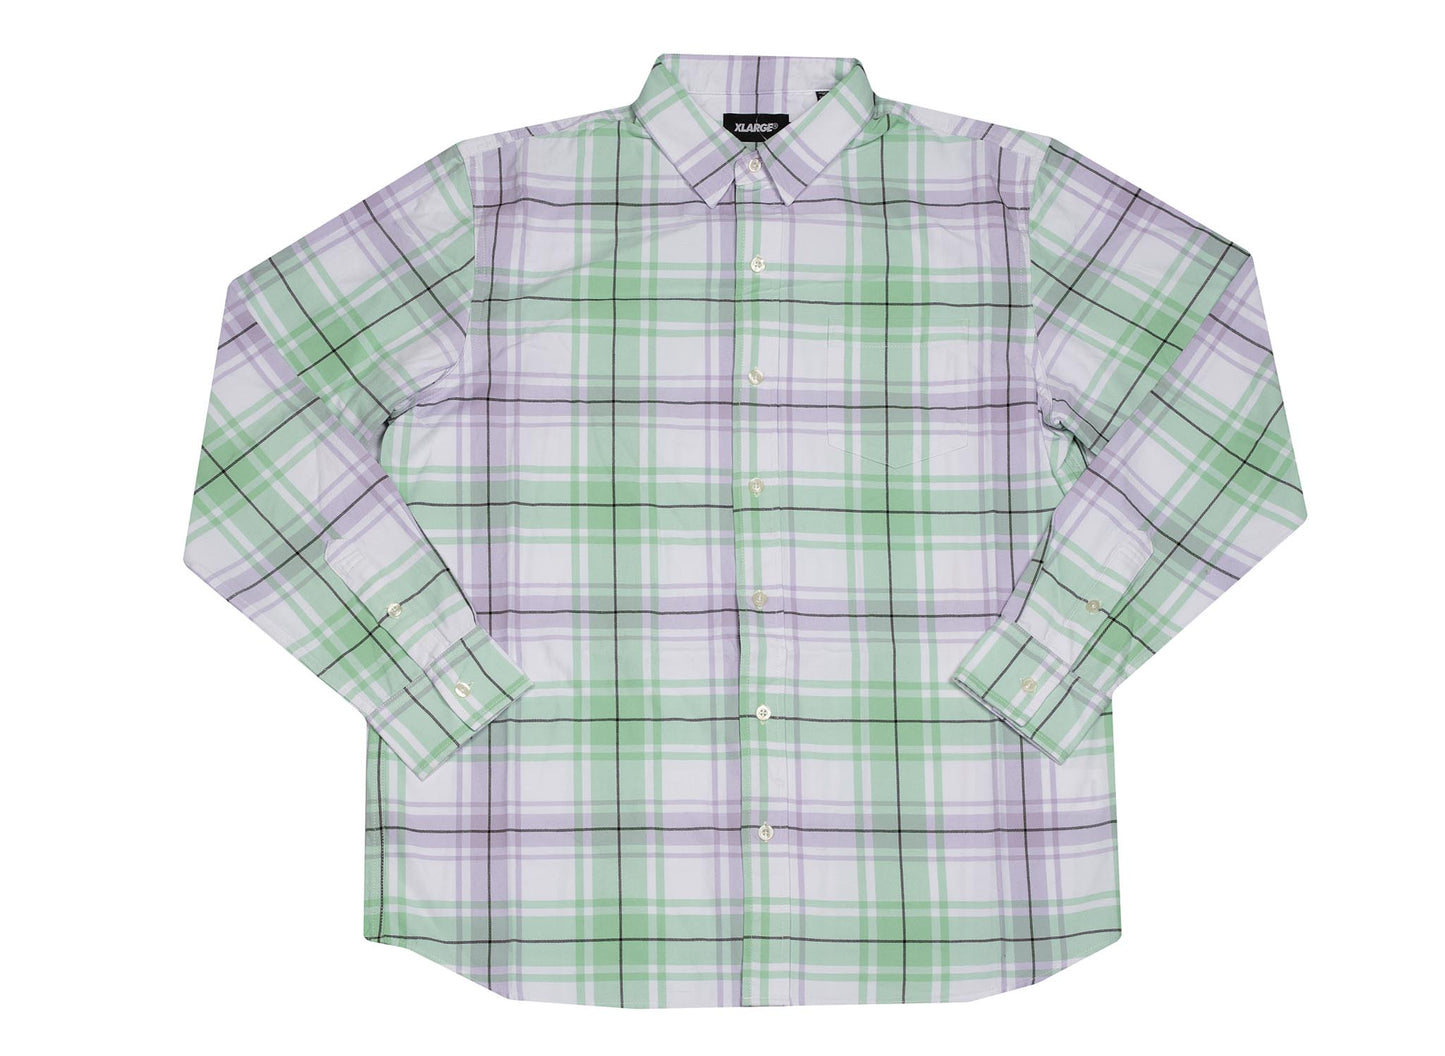 X-Large Plaid Pattern Shirt